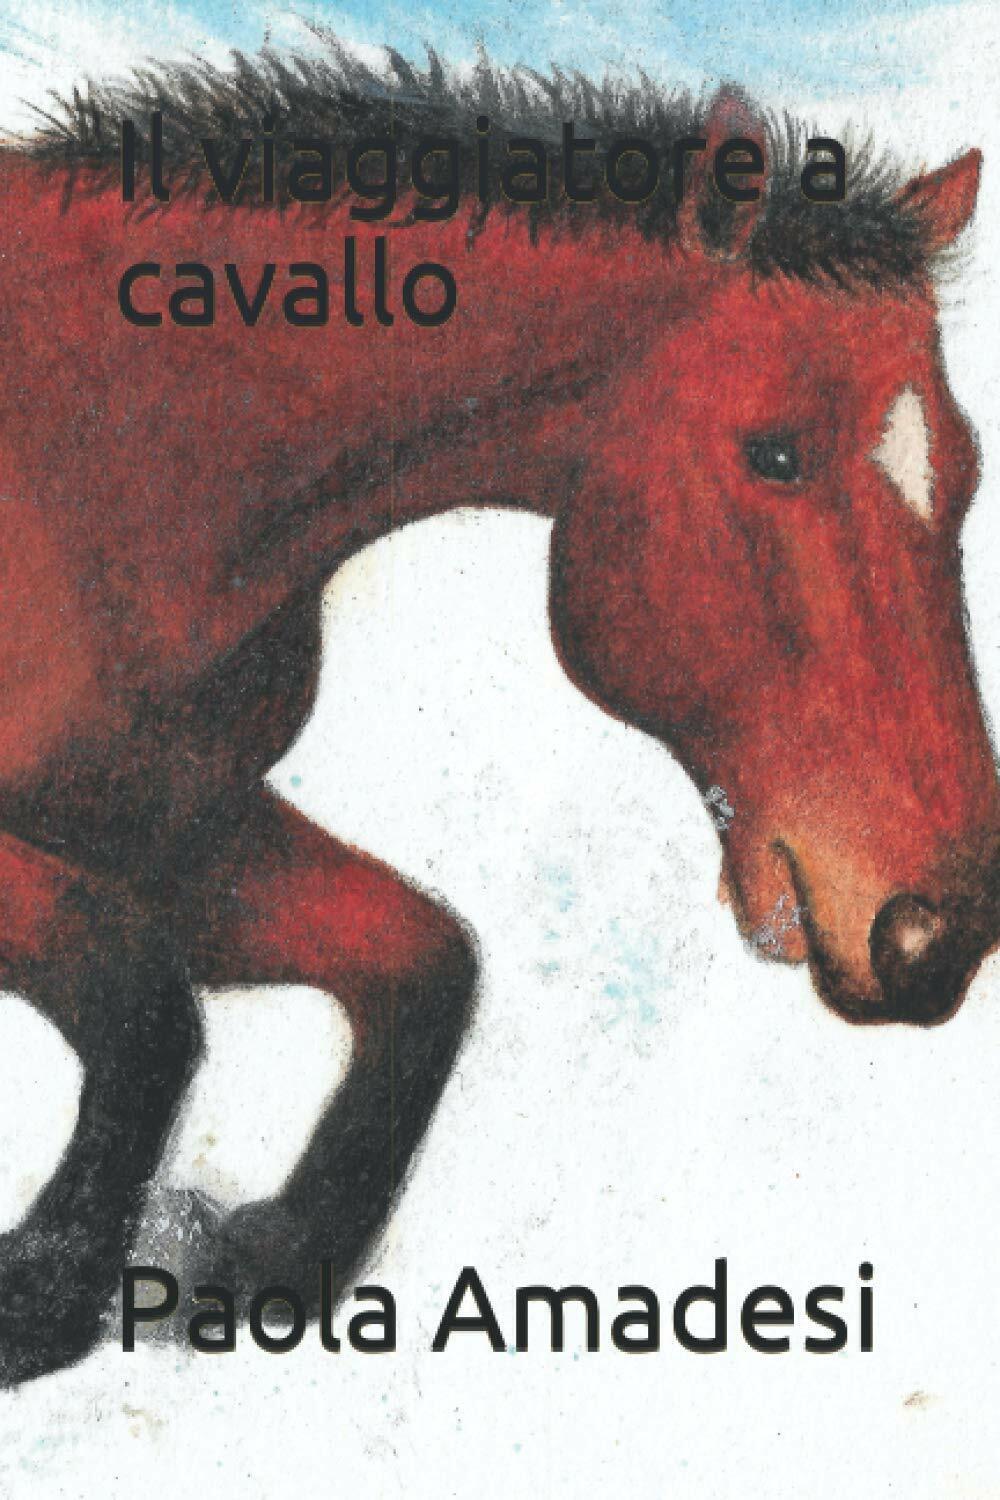 Il viaggiatore a cavallo di Paola Amadesi,  2020,  Indipendently Published